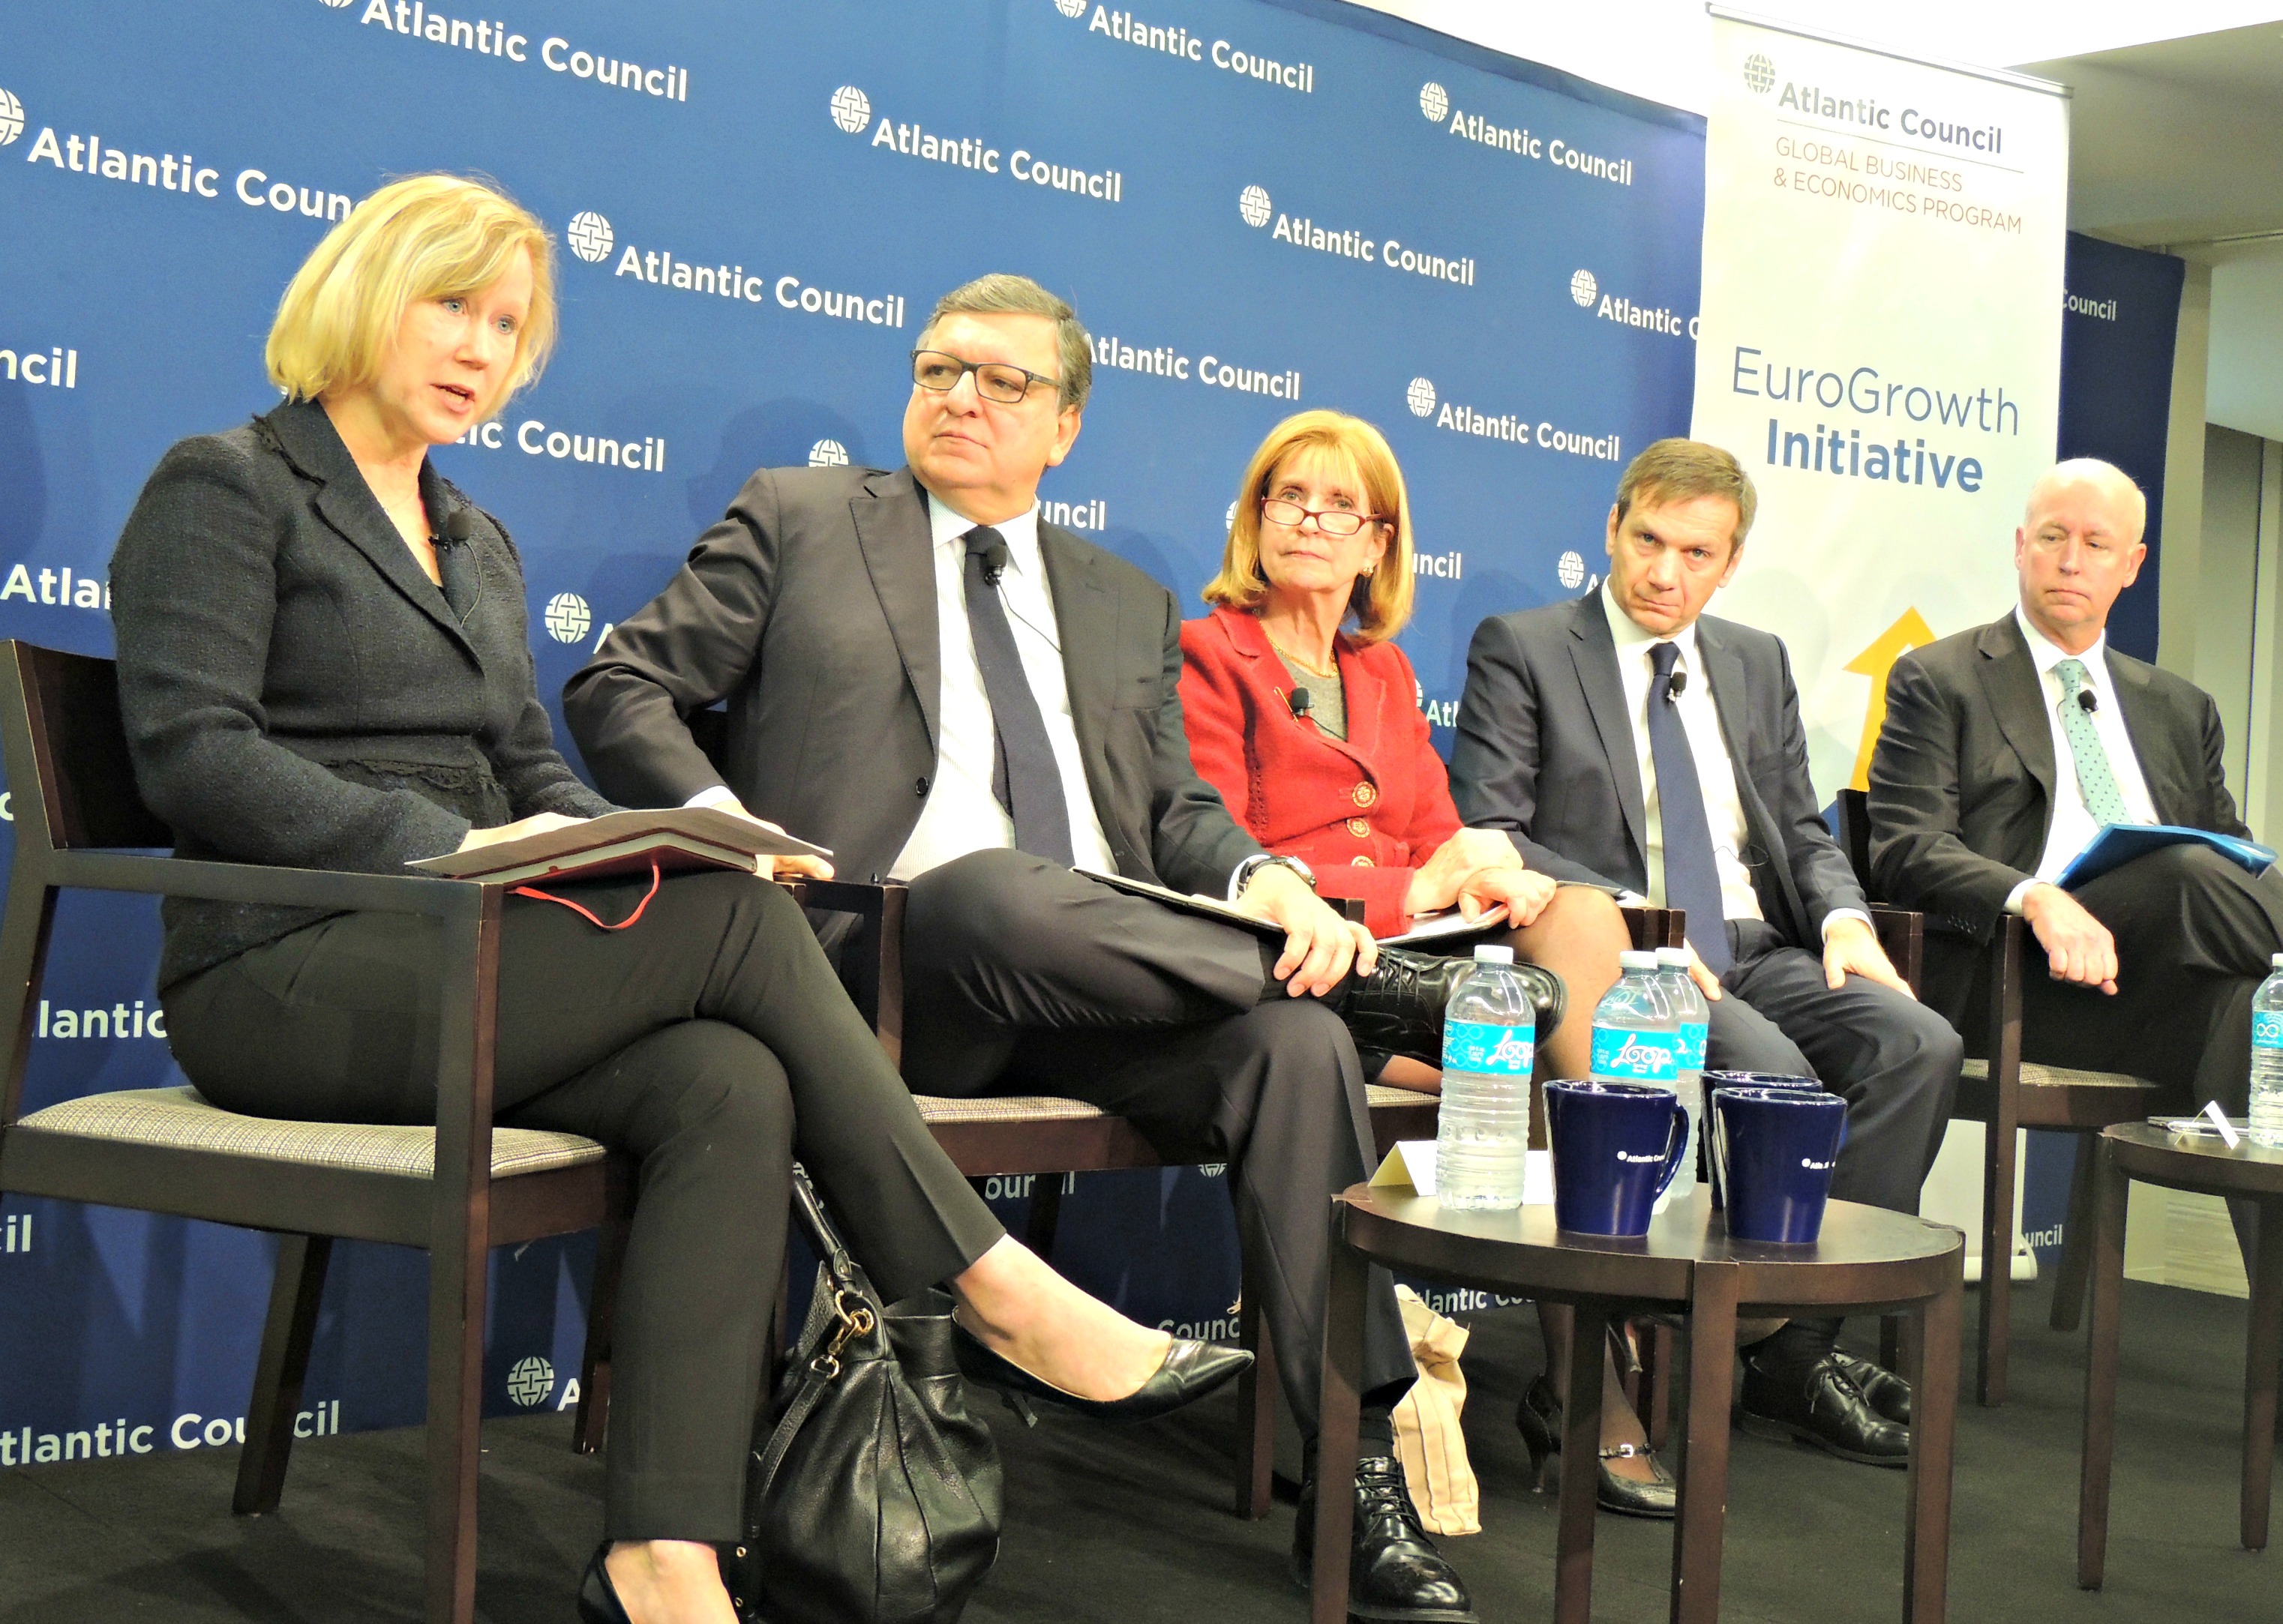 Panel II, featuring (from left to right) Susan Lund, Jose Barroso, Paula Dobriansky, Gordon Bajnai, and Raymond McDaniel, addresses the transatlantic effects of US and EU economic policies.